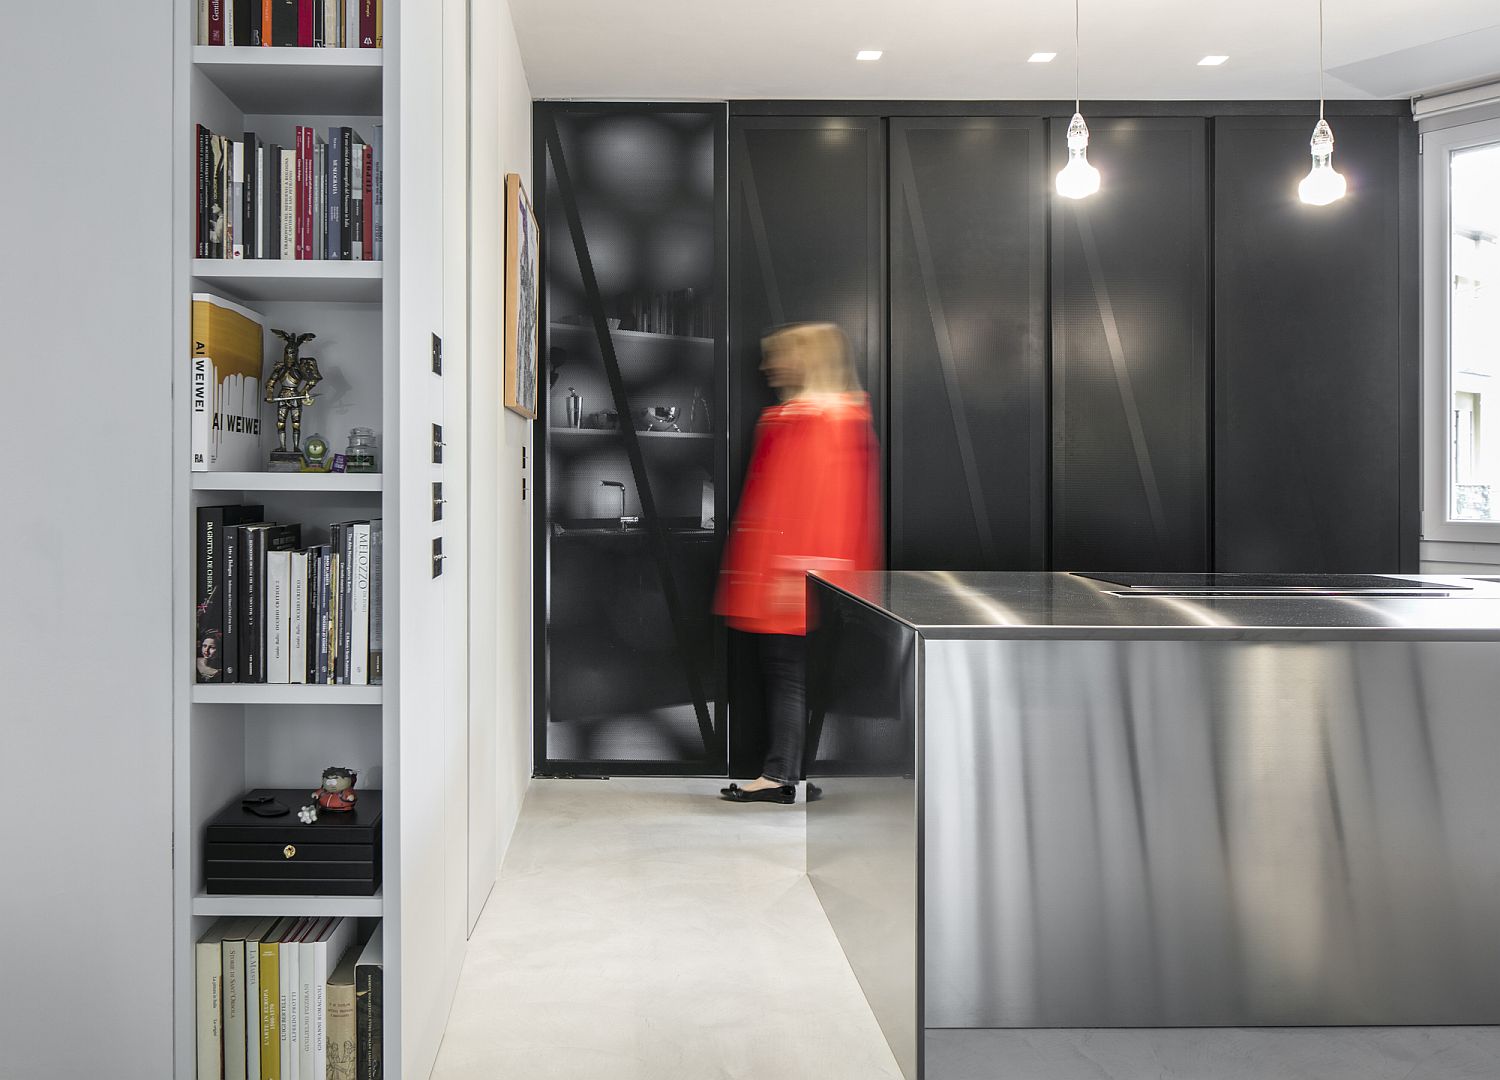 Wonderful-use-of-black-shapes-the-kitchen-cabinets